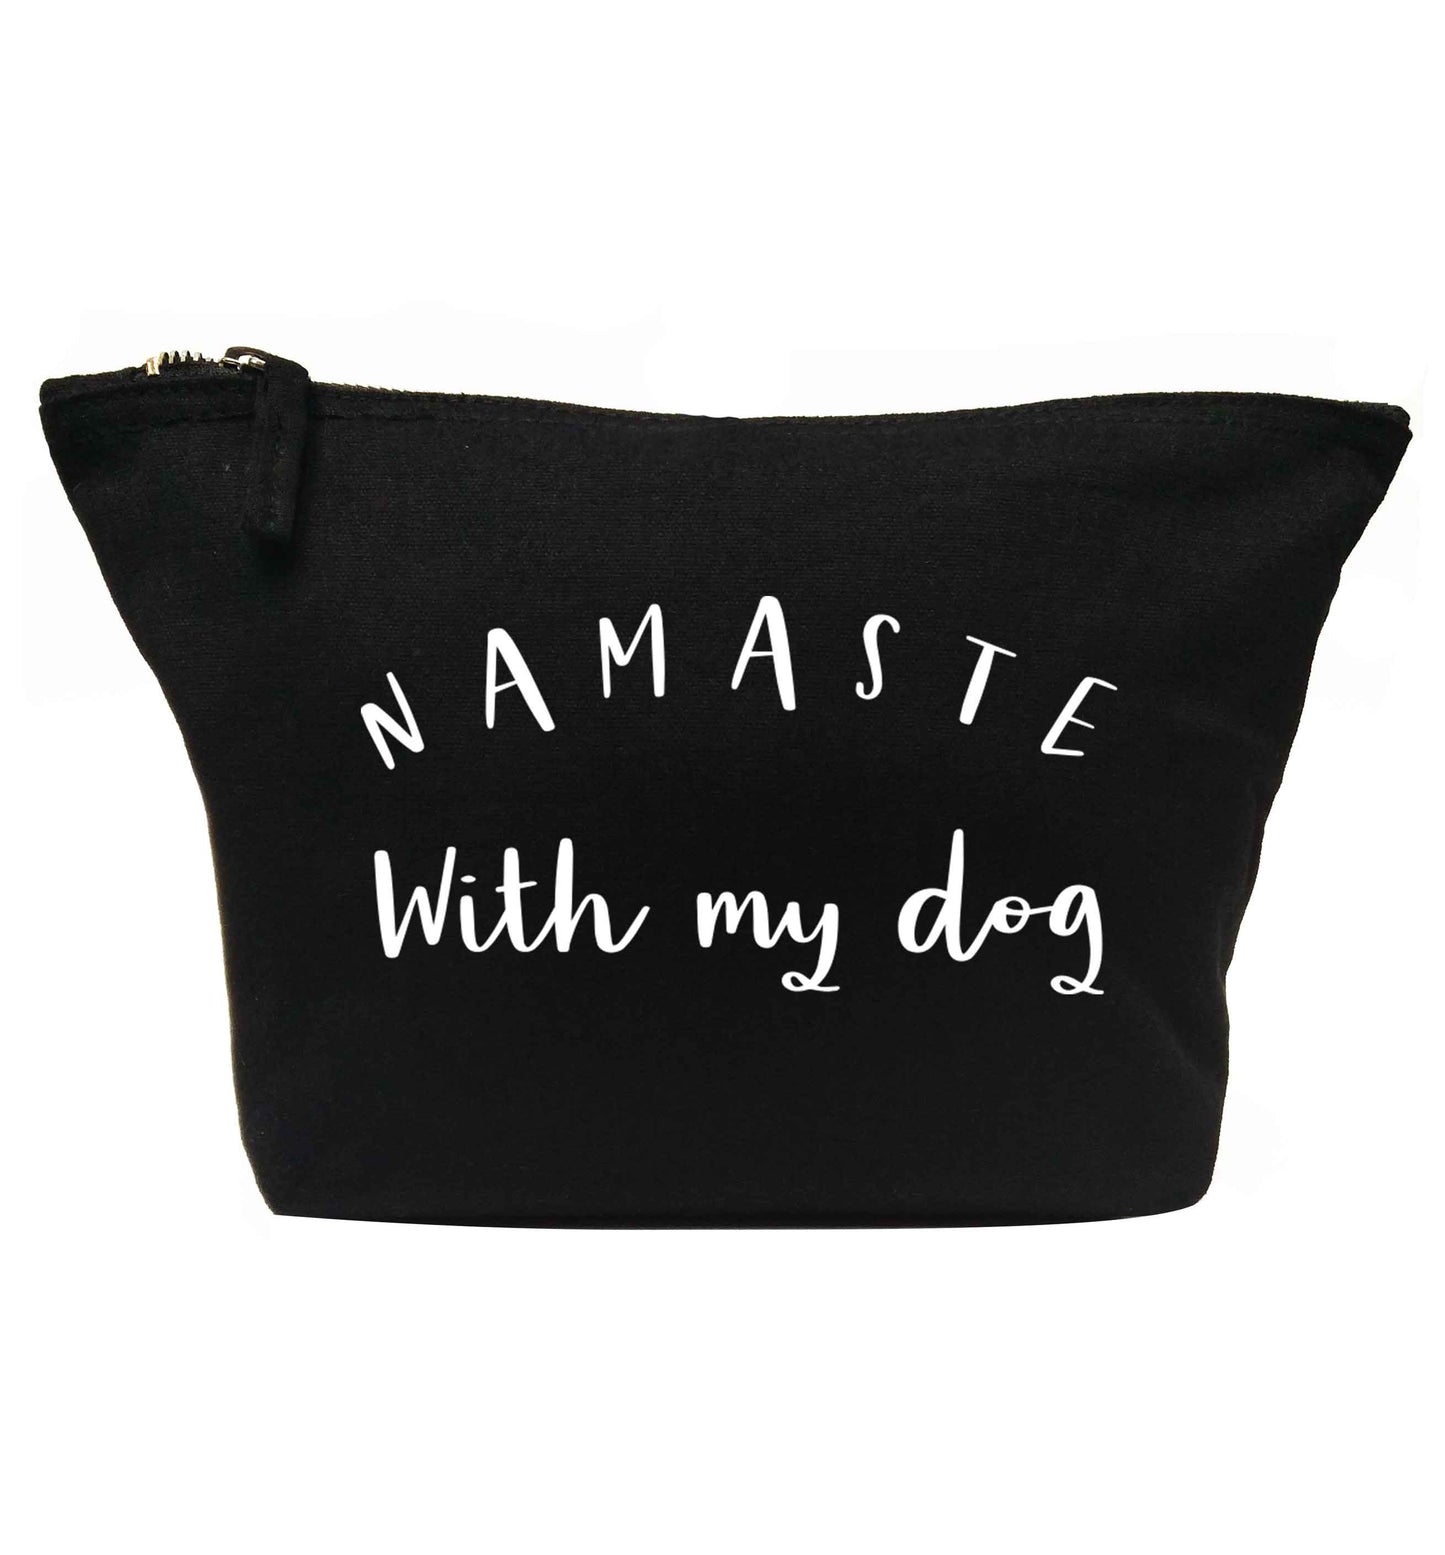 Namaste with my dog | makeup / wash bag